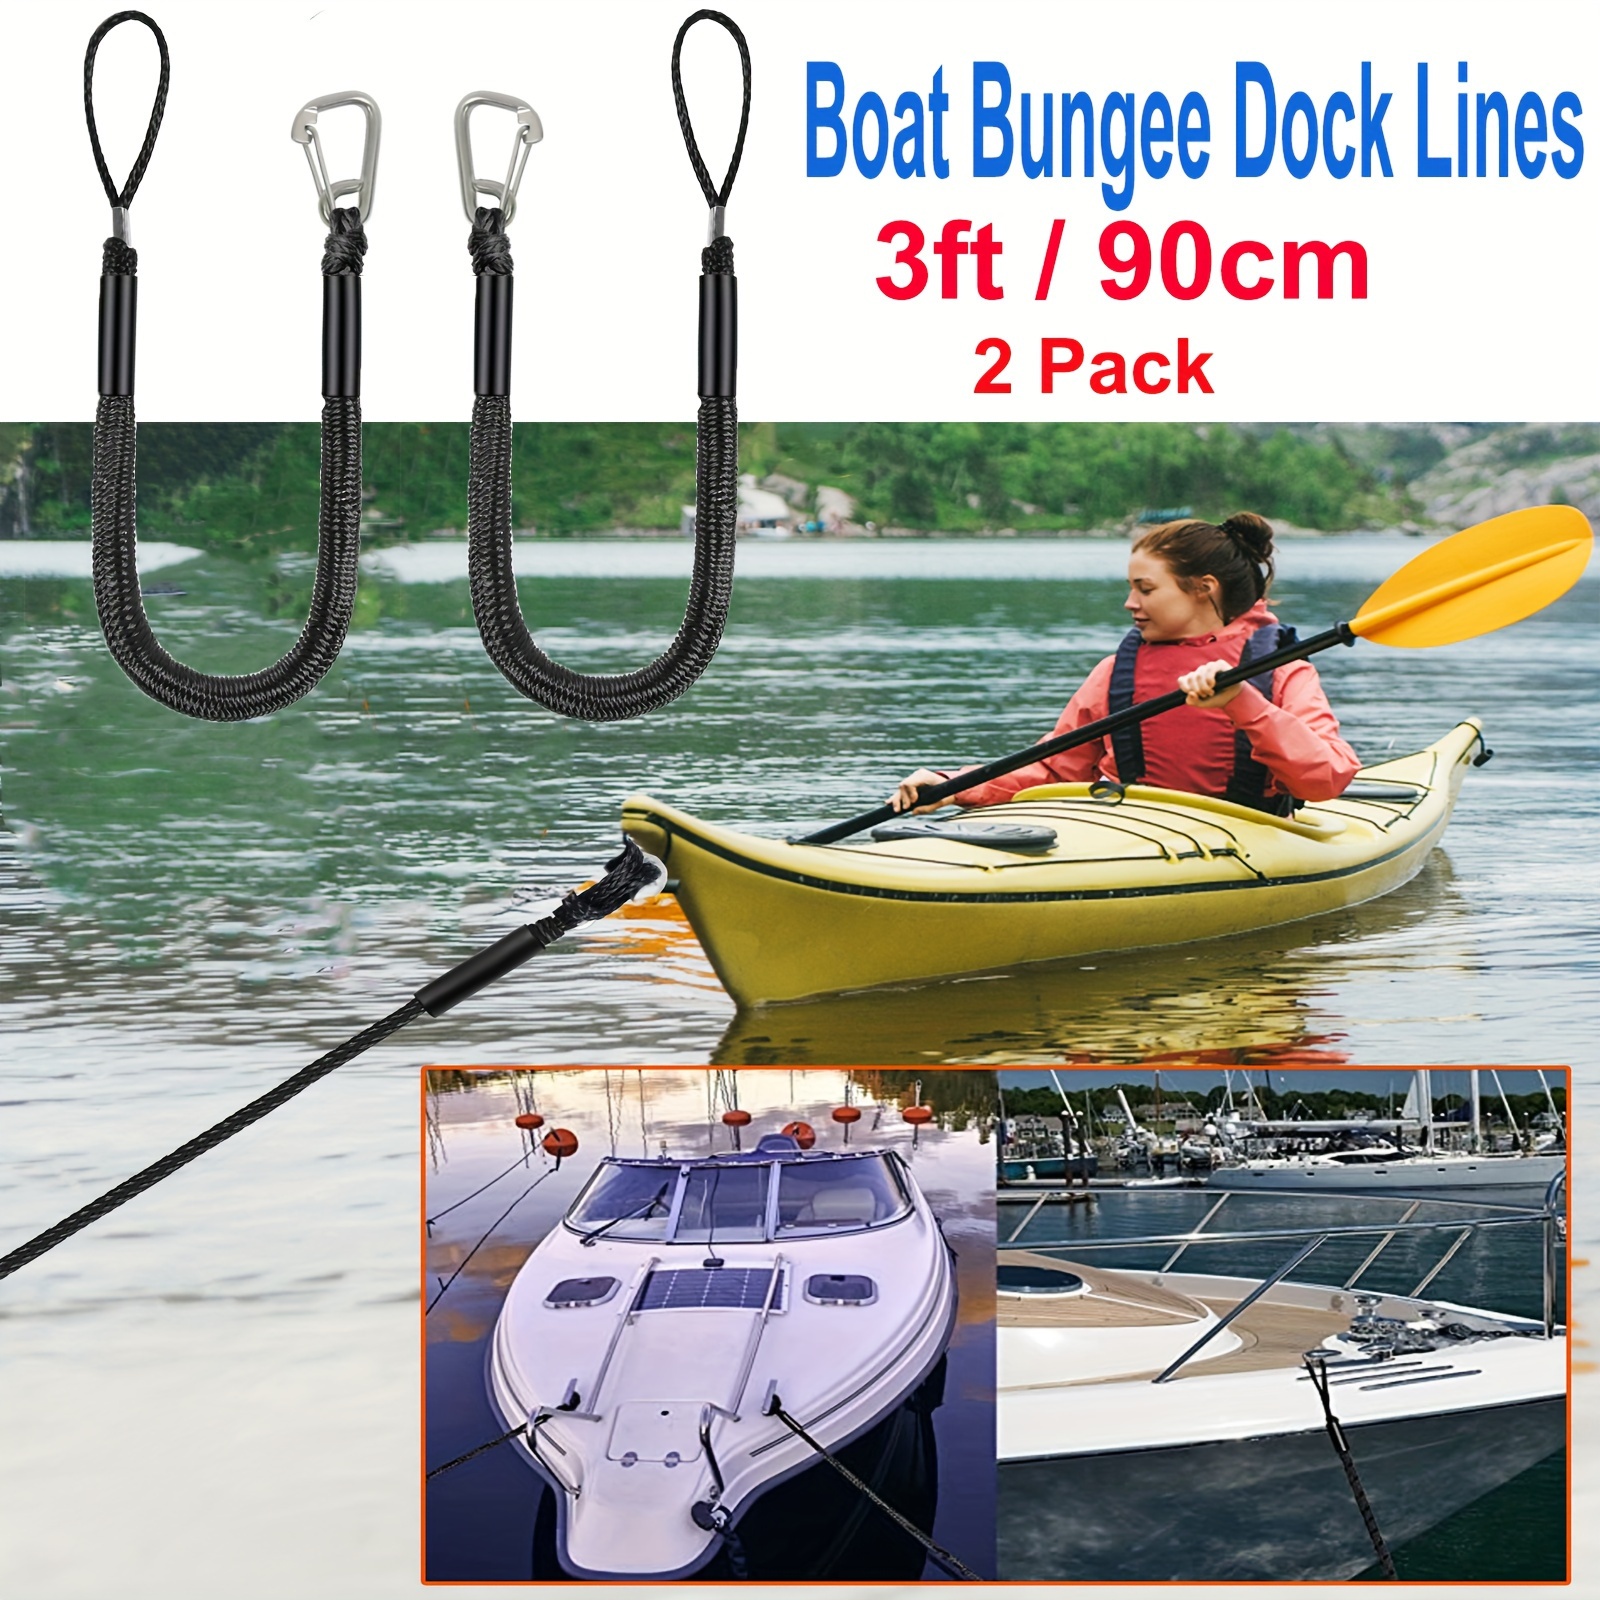  Boat Bungee Dock Lines,Jet Ski Accessories Mooring